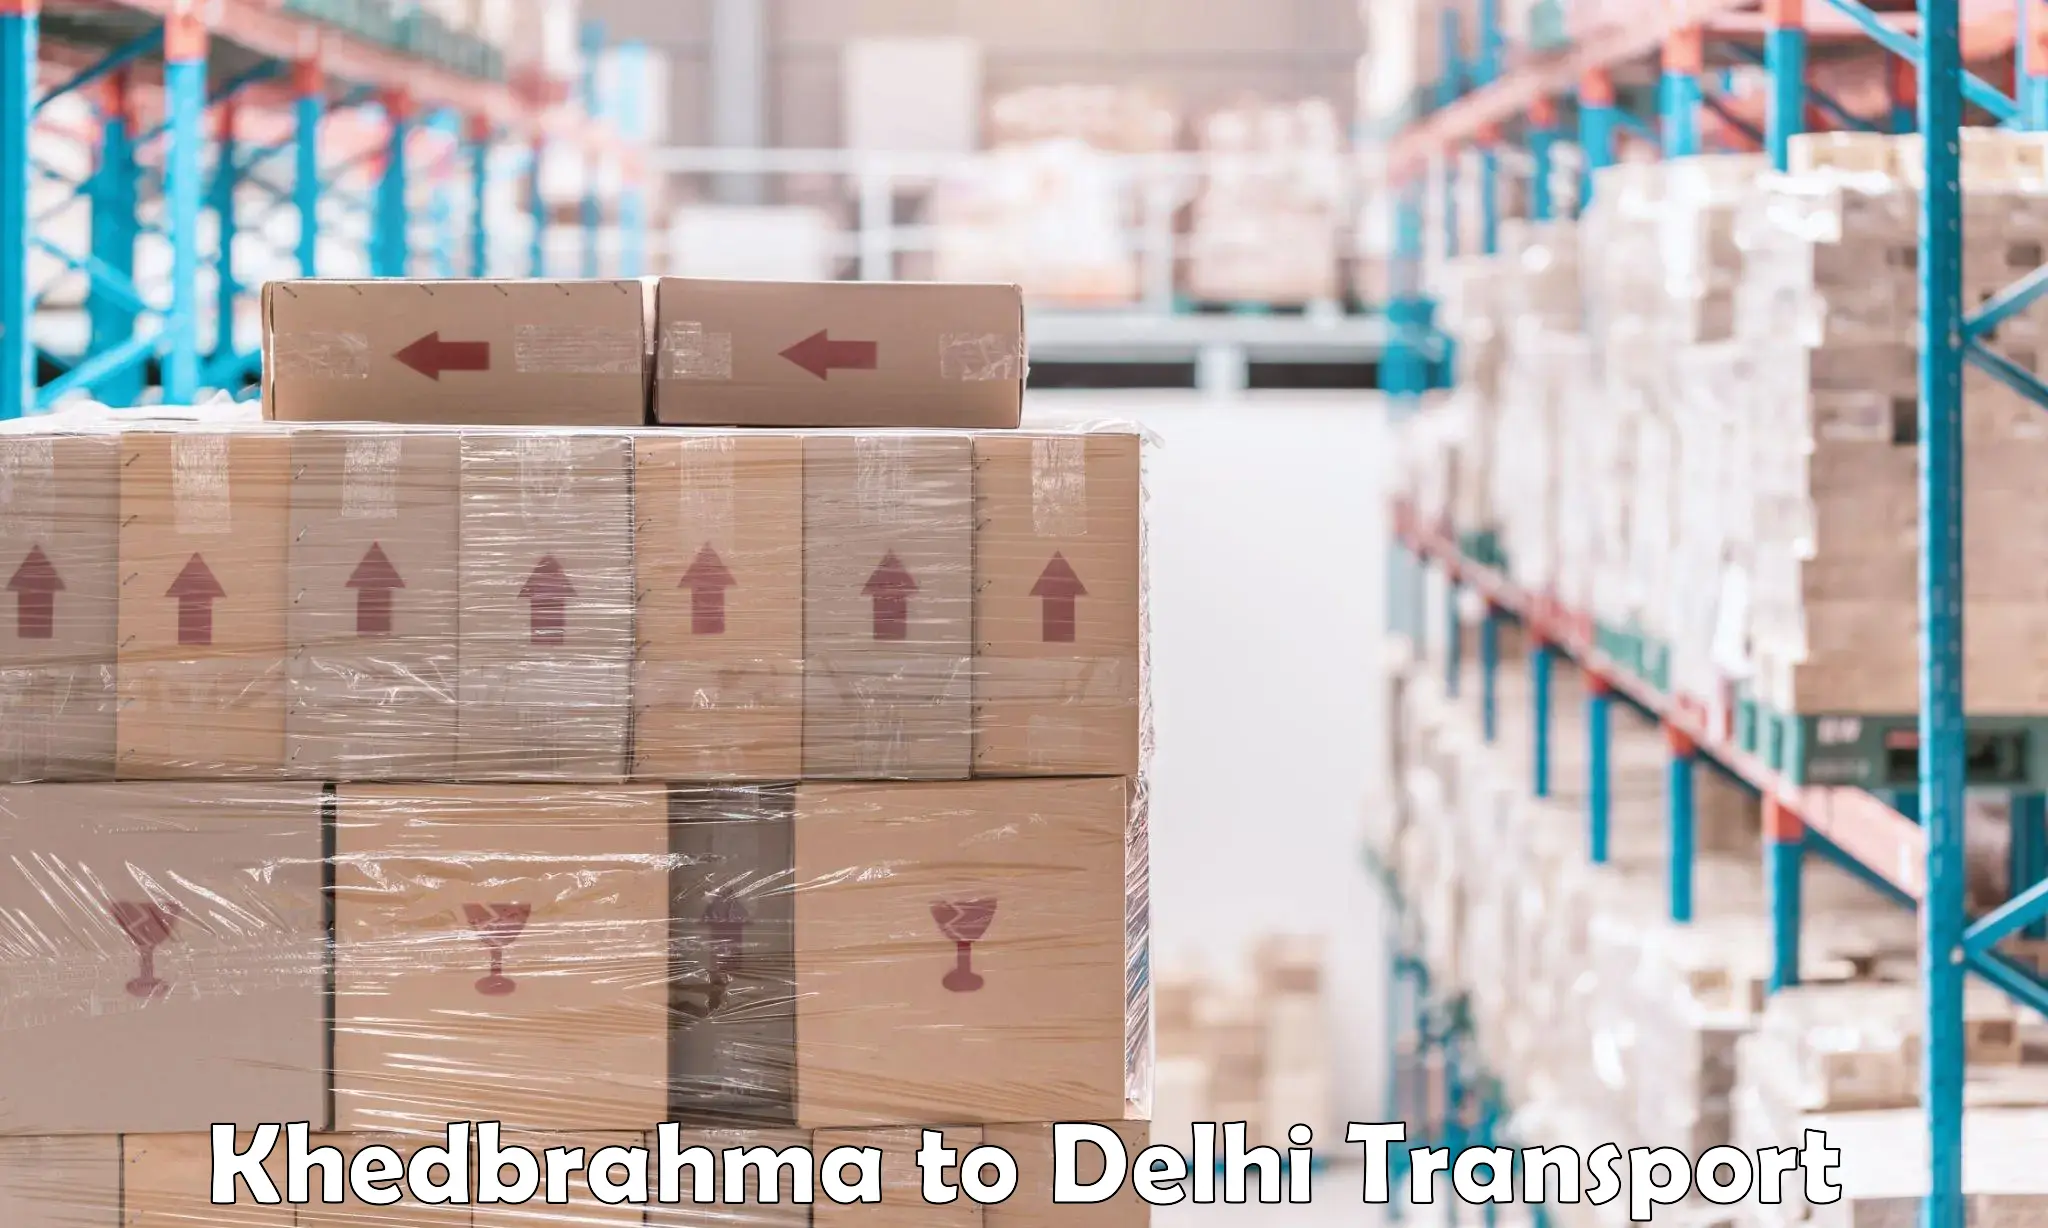 Truck transport companies in India Khedbrahma to Delhi